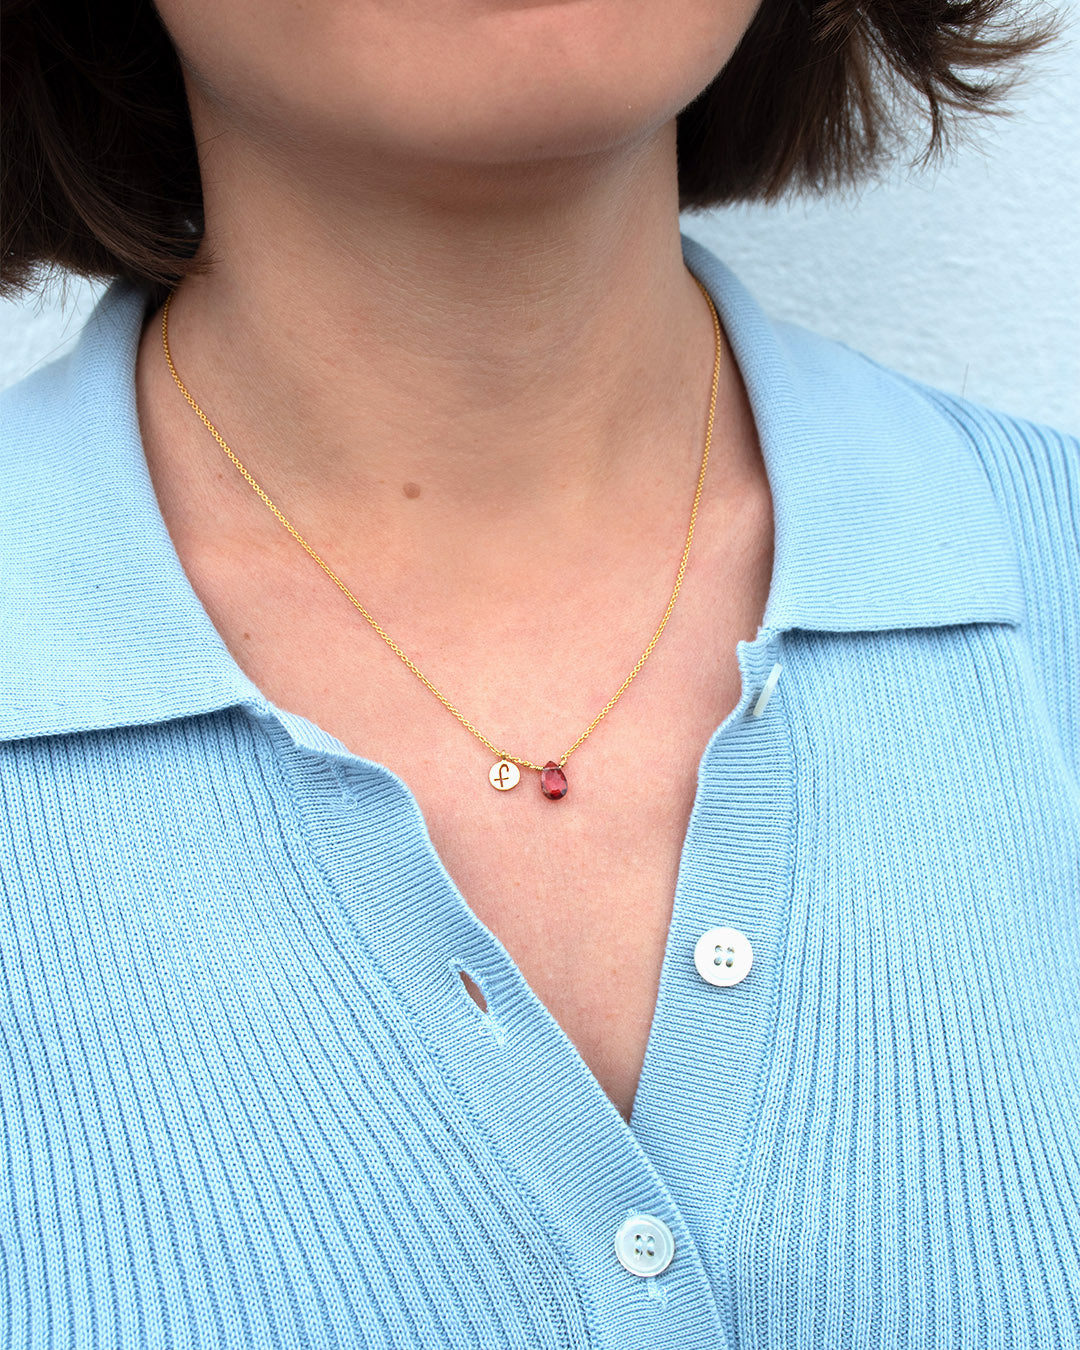 Custom handmade gold necklace - Giulia Tamburini personalize